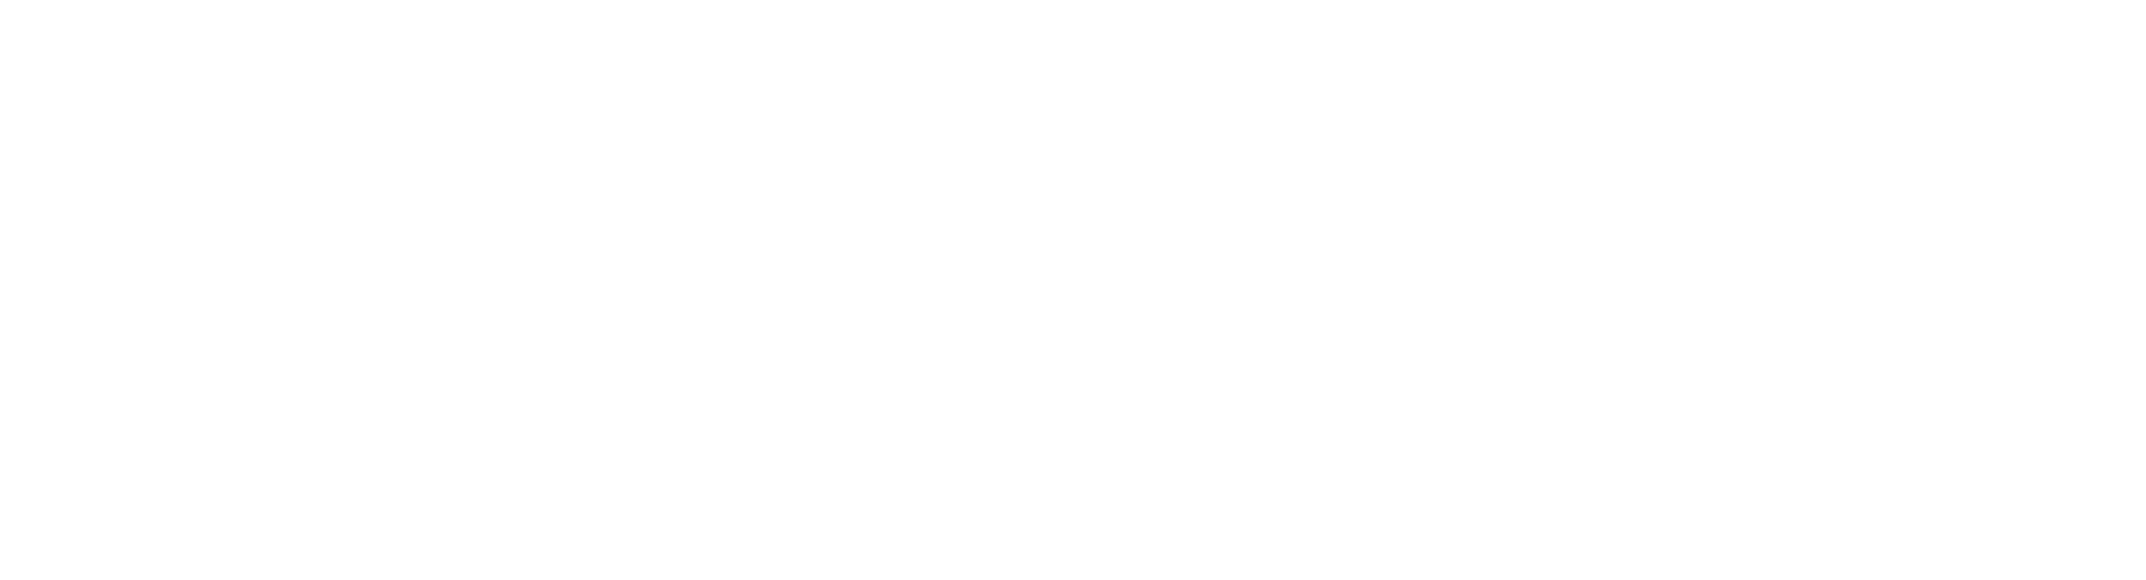 Robomatter logo